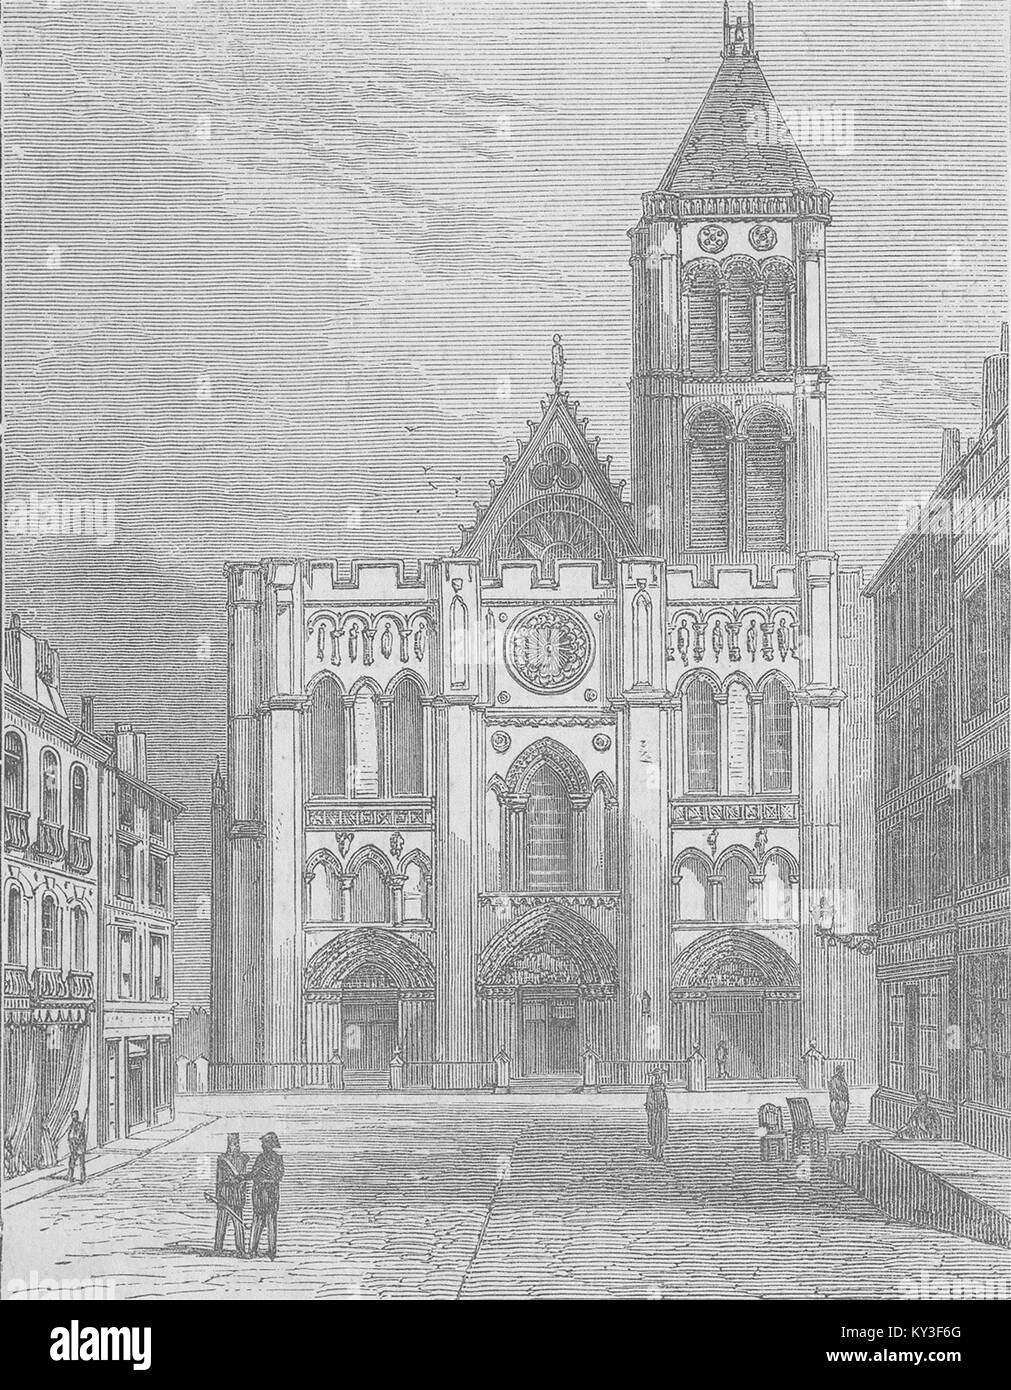 Francia St Denis, Parigi 1870. Il grafico Foto Stock